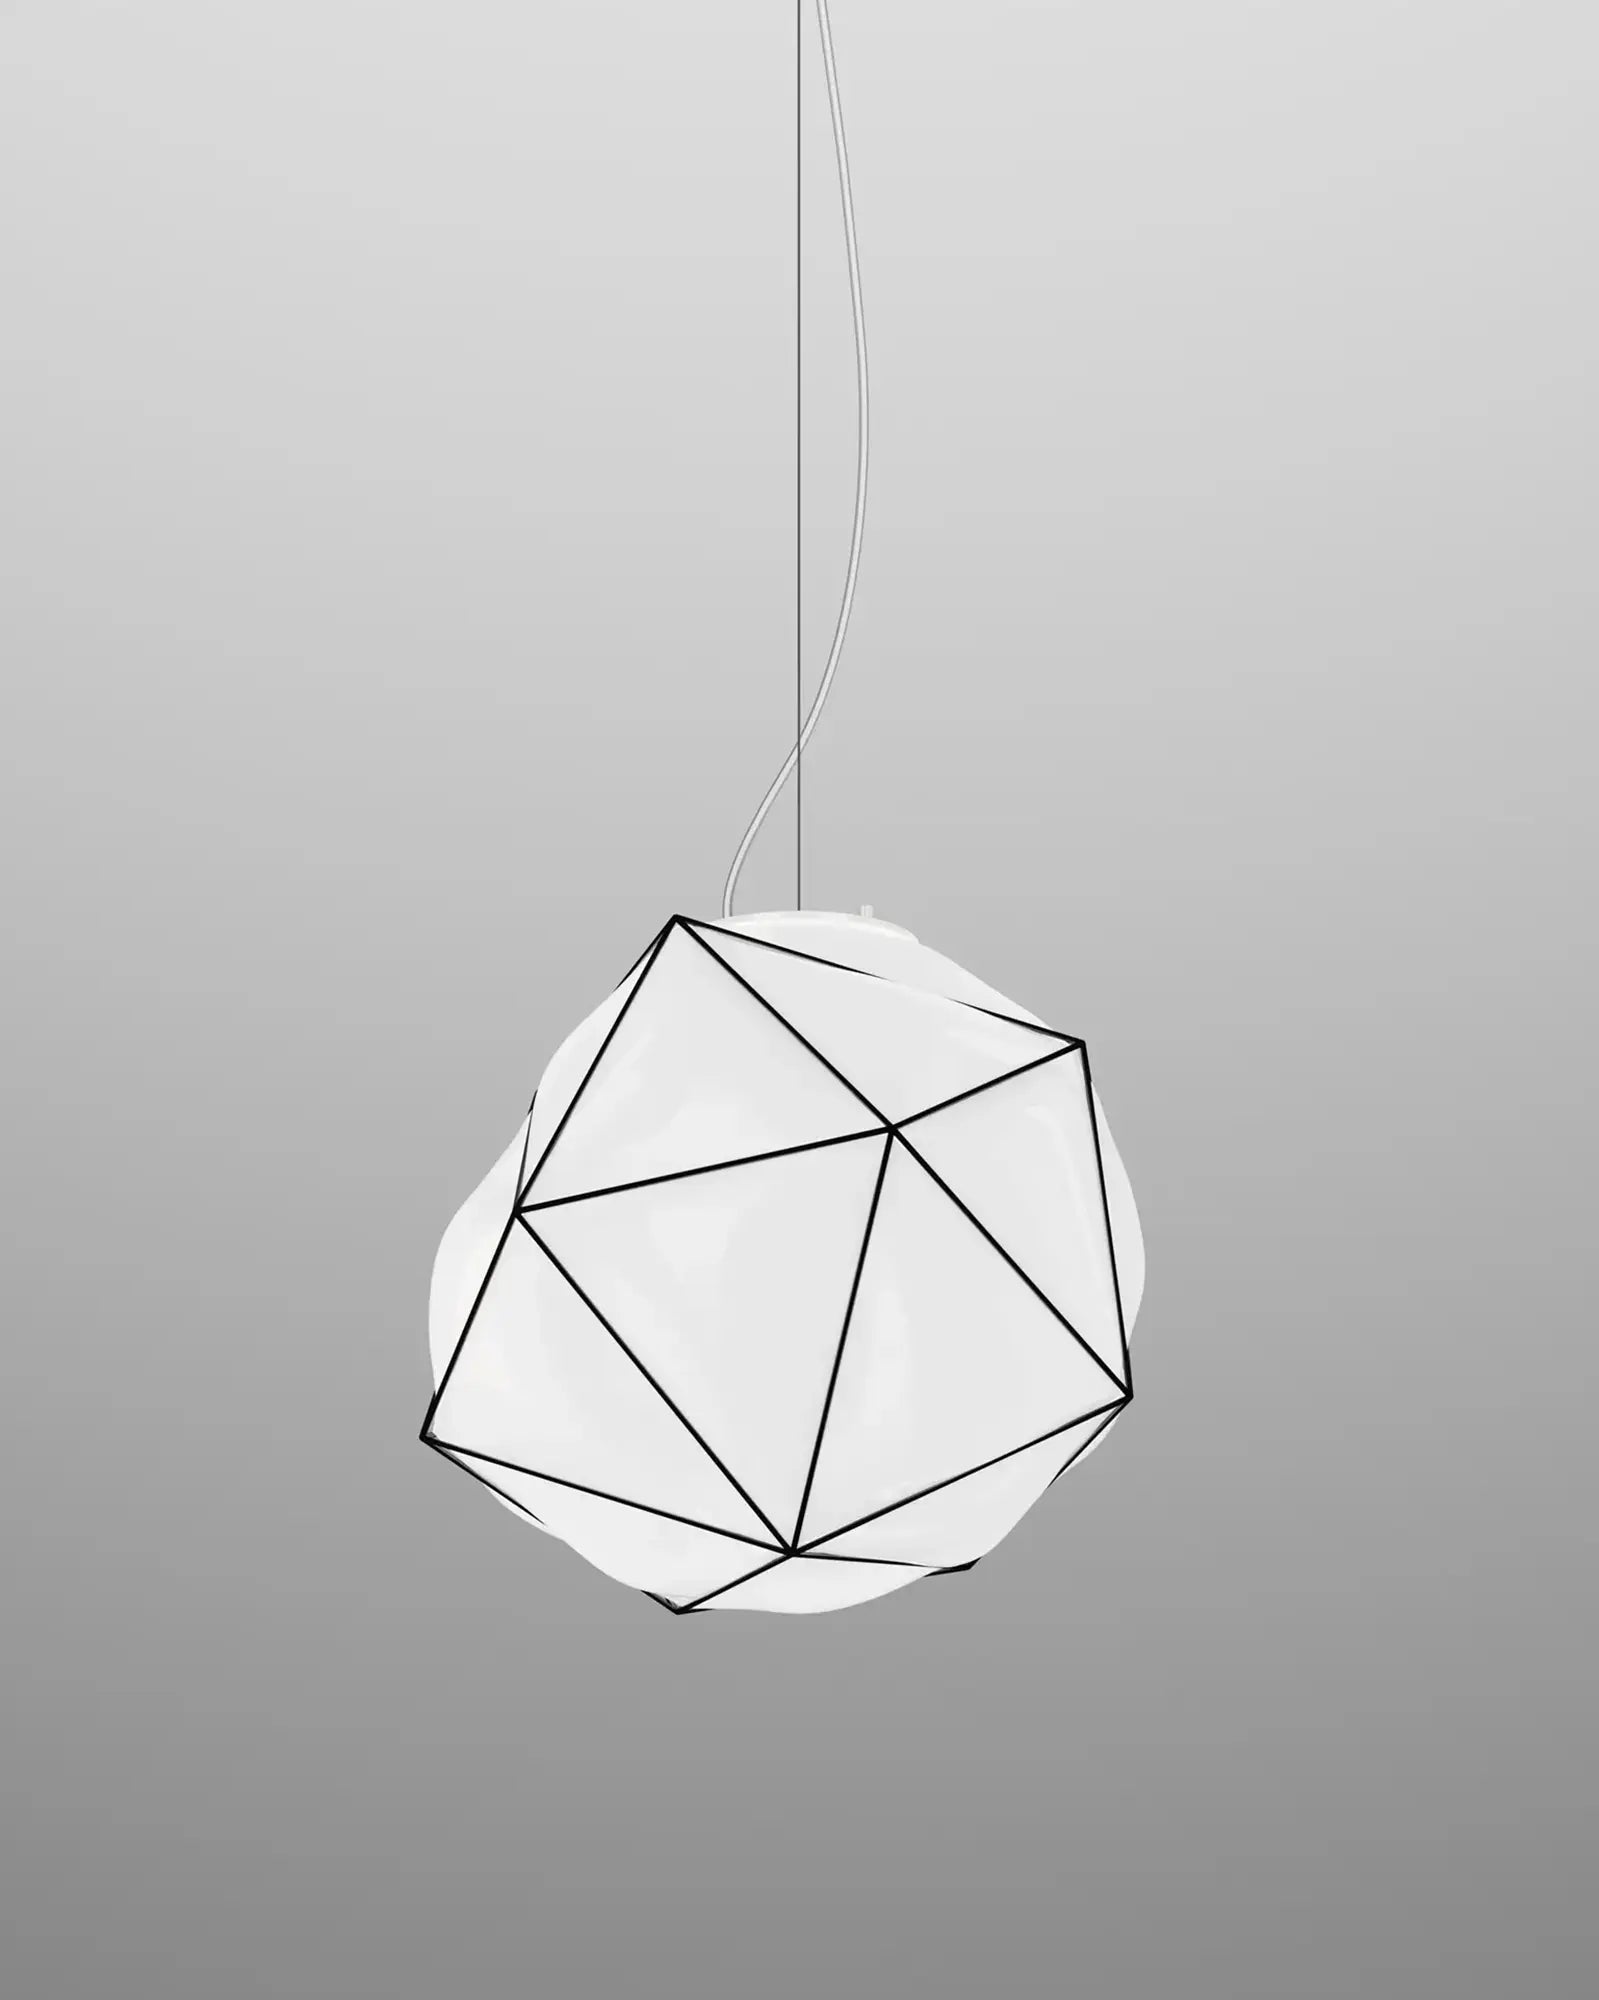 Semai blown Murano glass pendant light in a metal cage structure